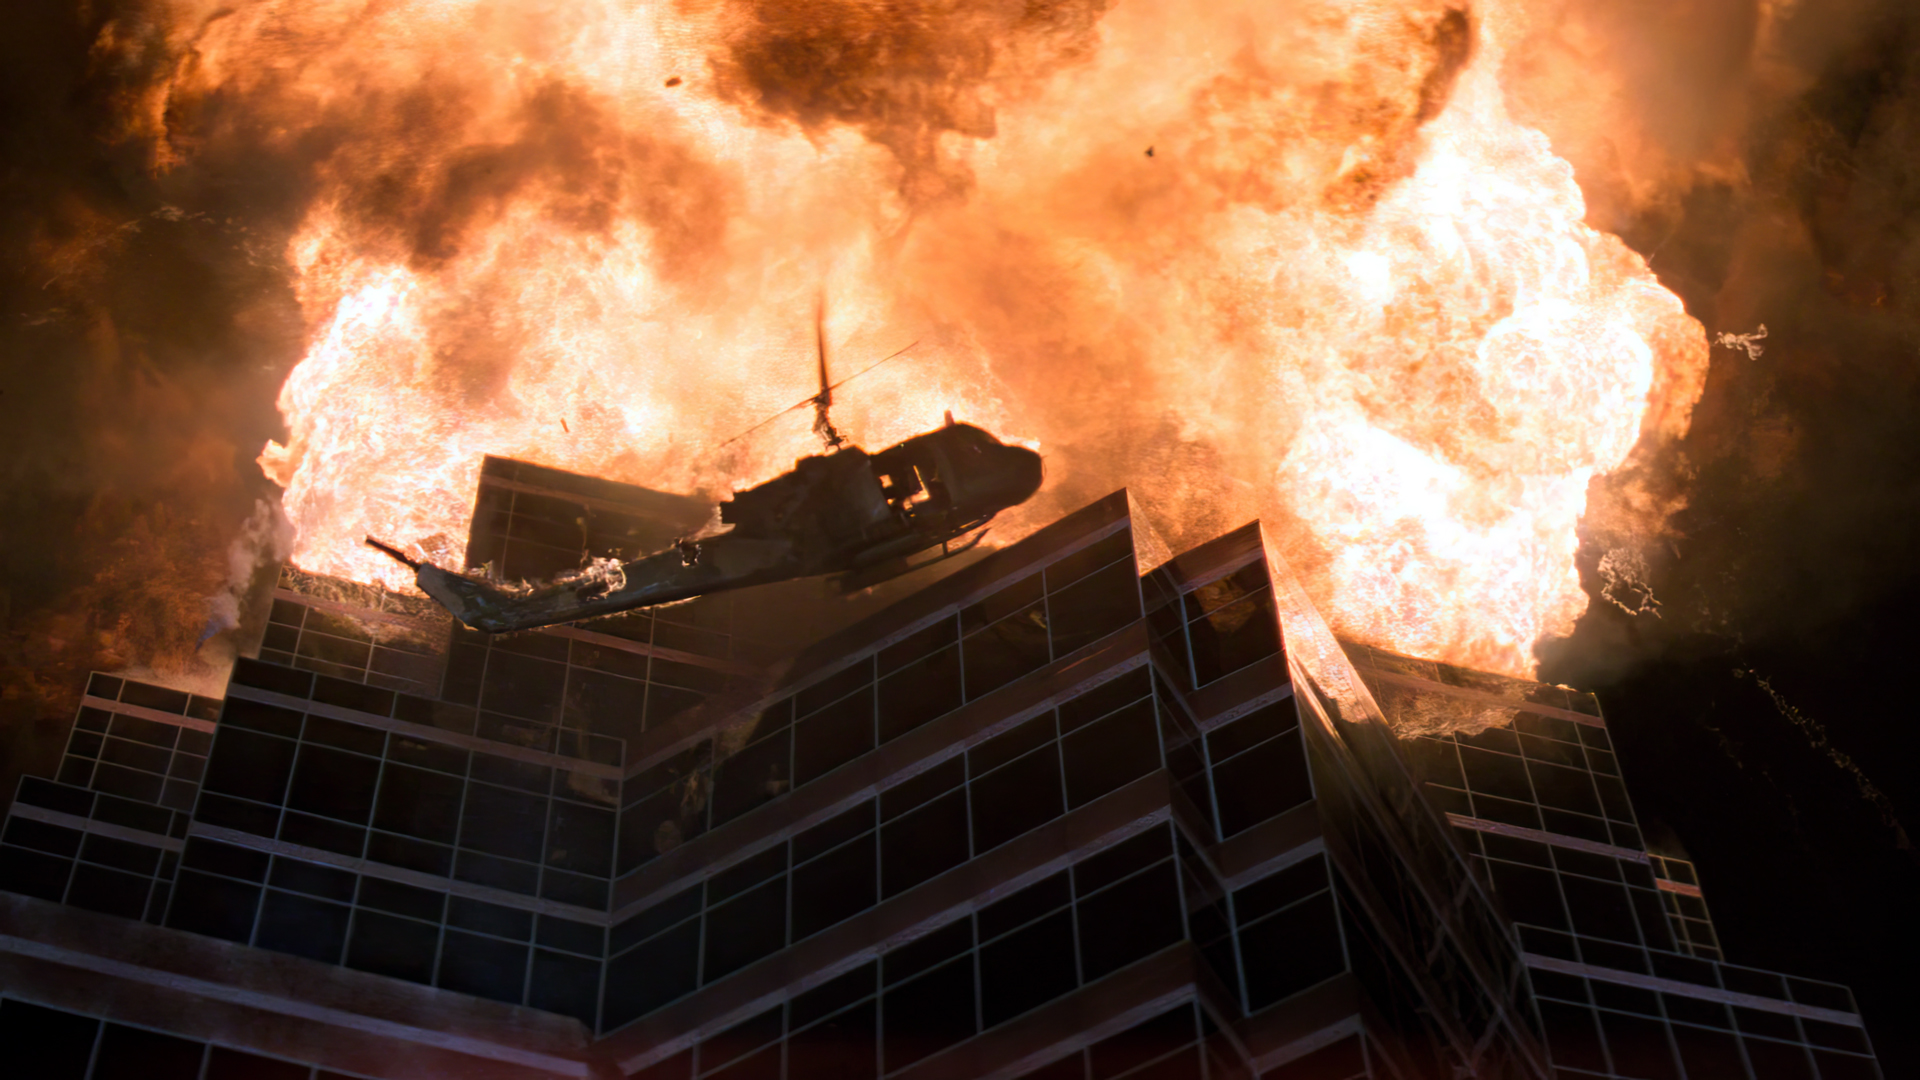 General 1920x1080 Die Hard movies film stills helicopters explosion skyscraper fire